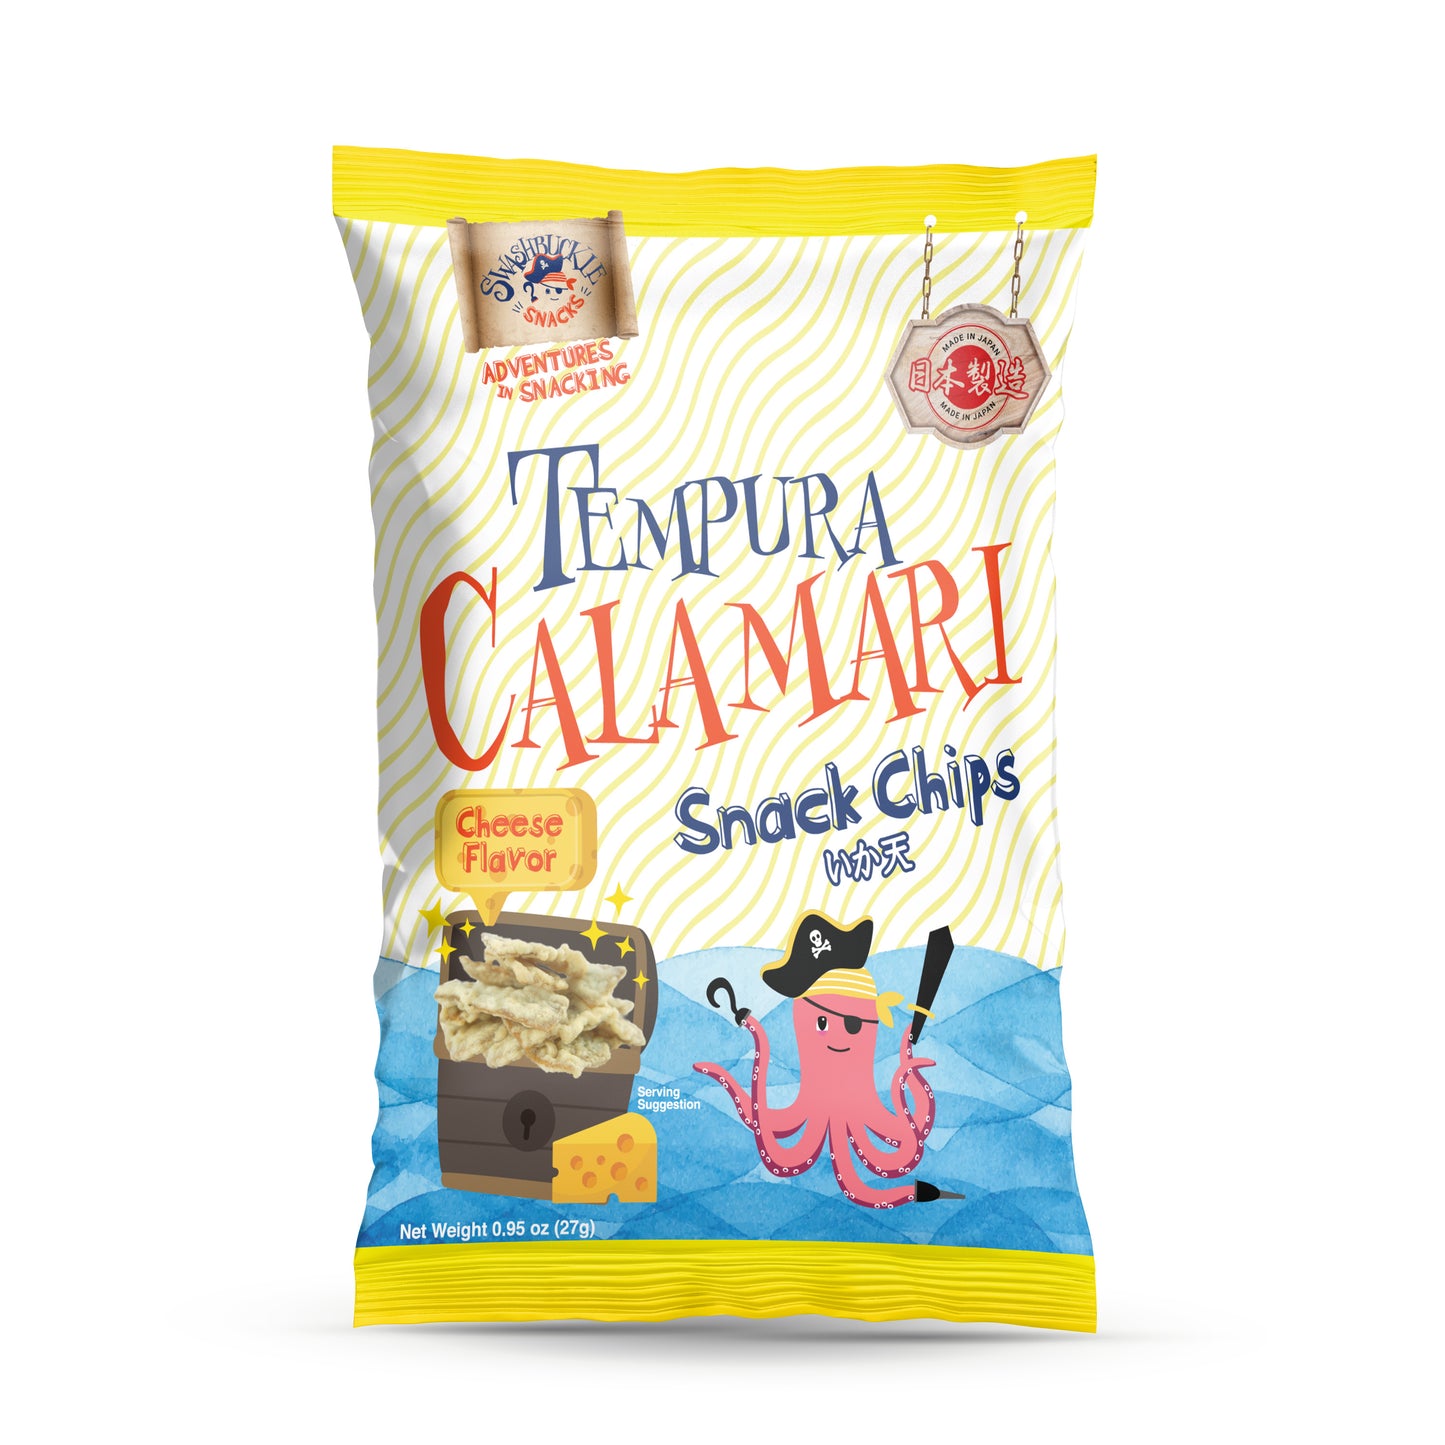 Crispy Tempura Calamari Snack Chips Cheese Flavor